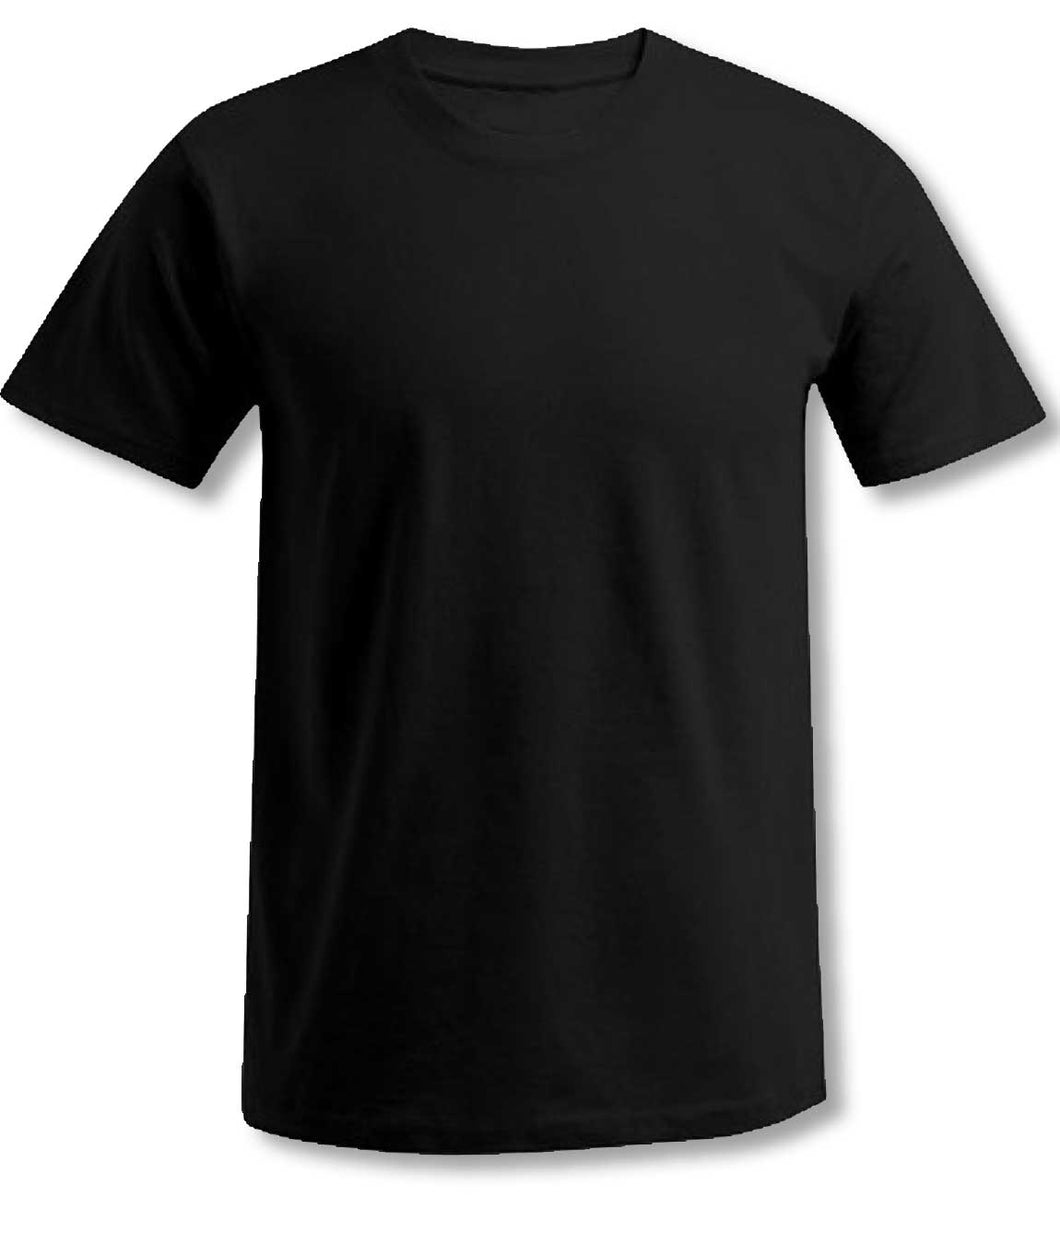 Promo T-Shirt Unisex (Ausverkauf)